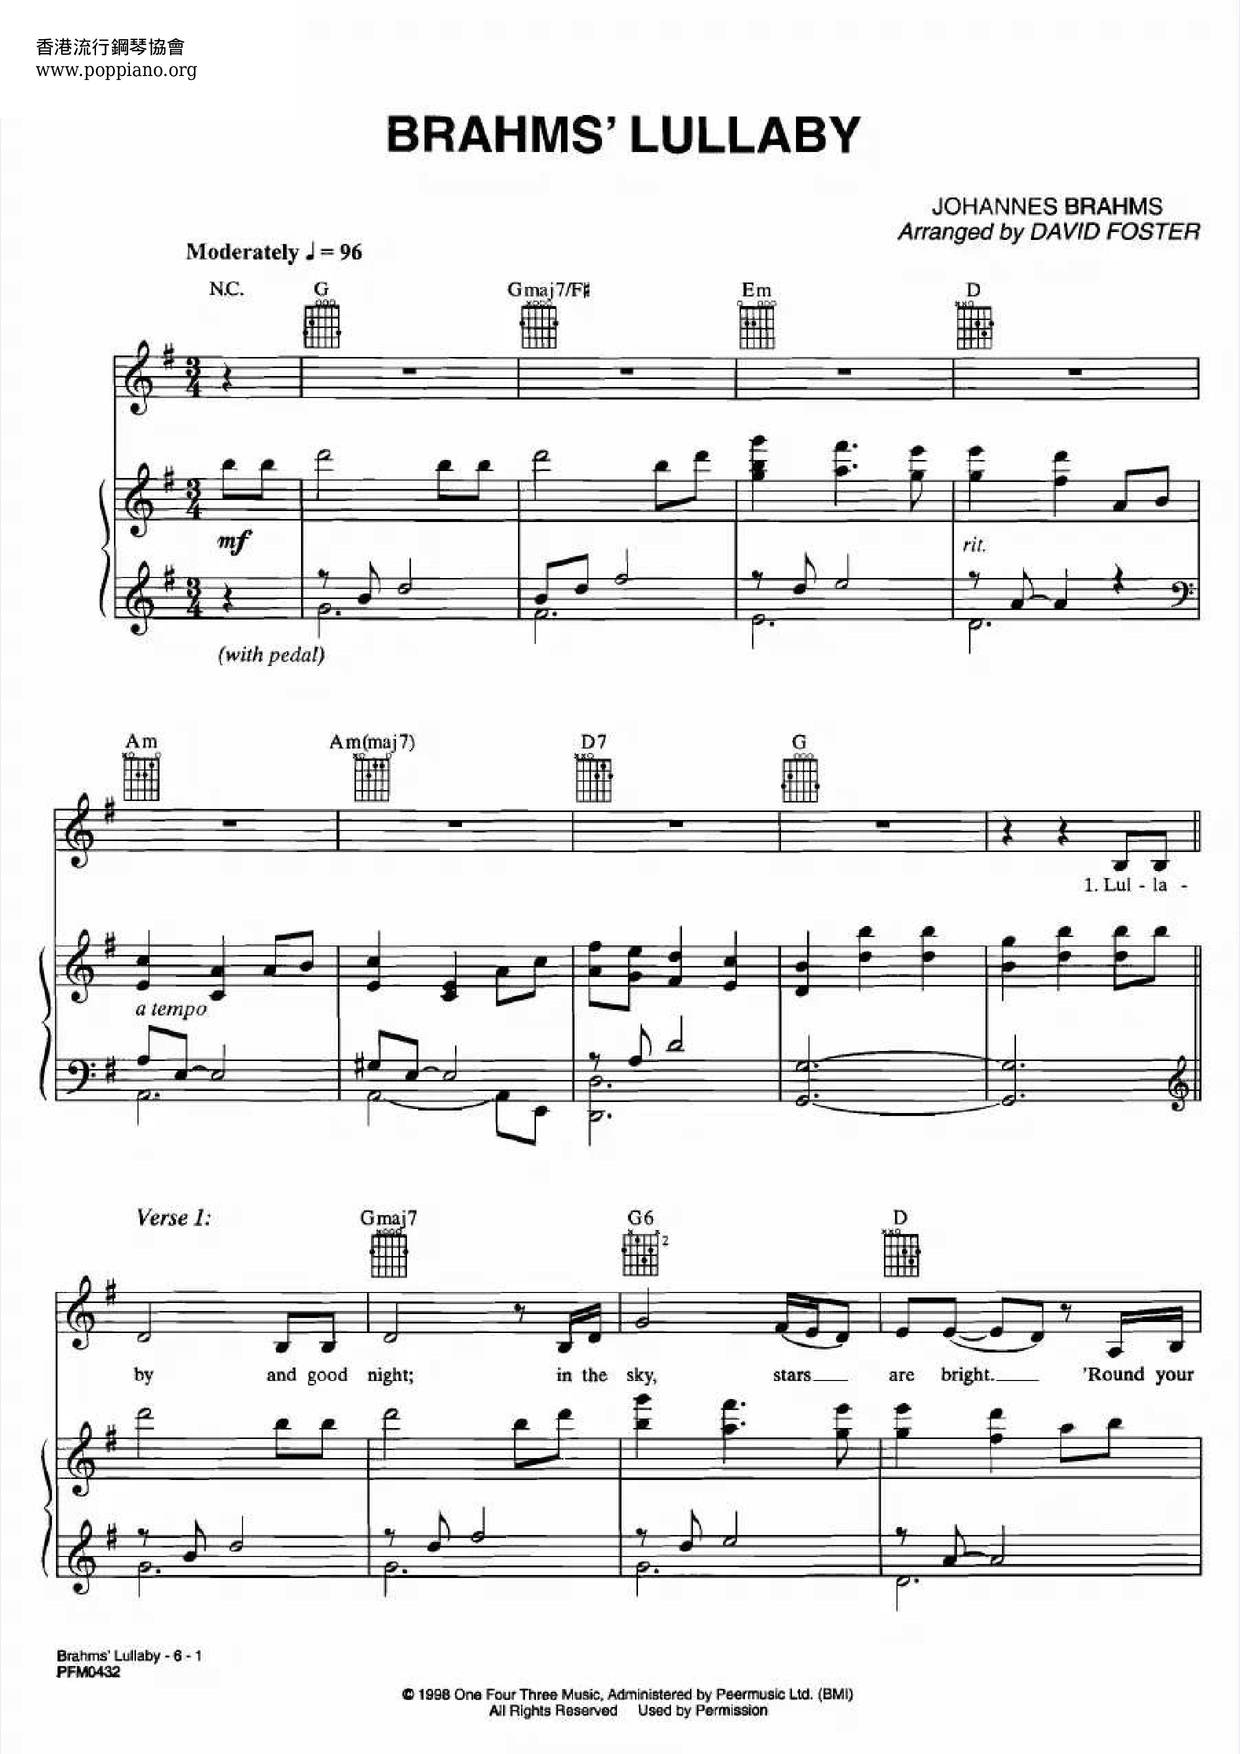 Brahms' Lullaby Score